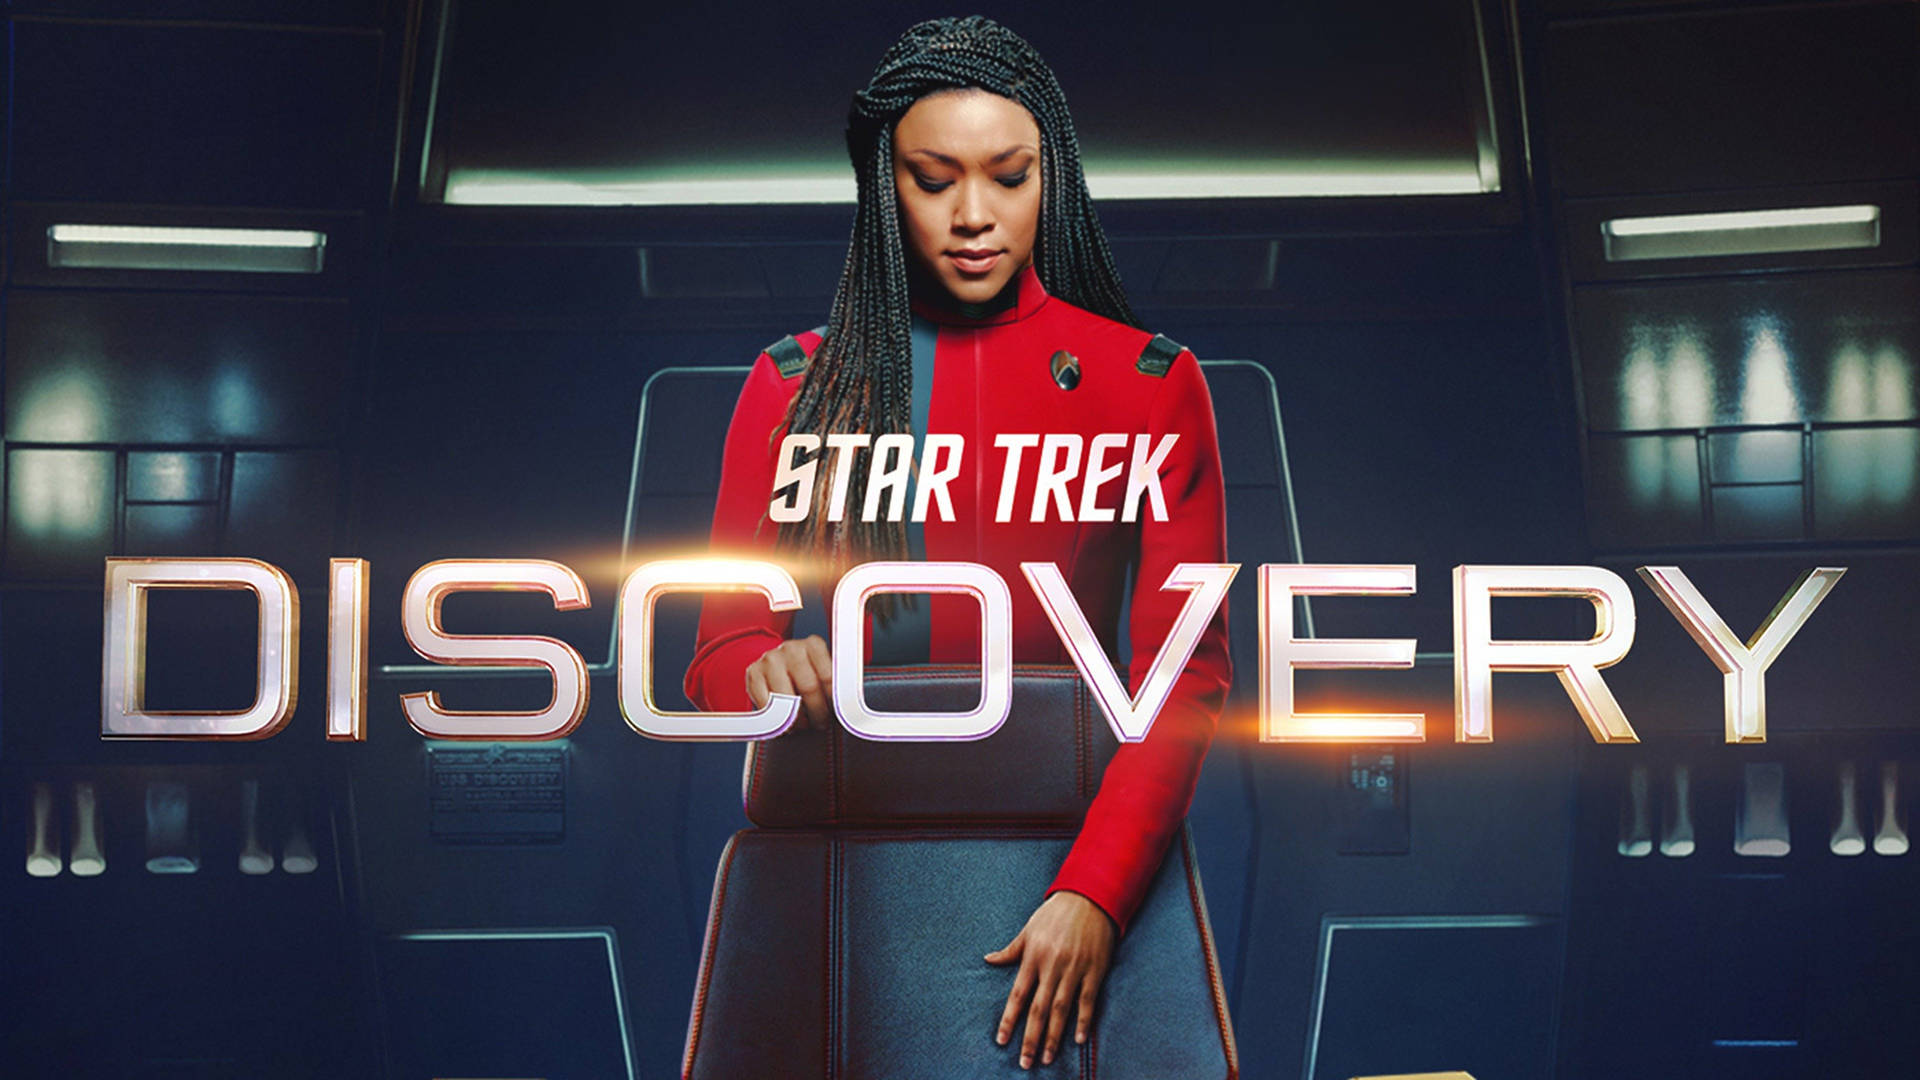 Star Trek Discovery Season 4 Poster Background